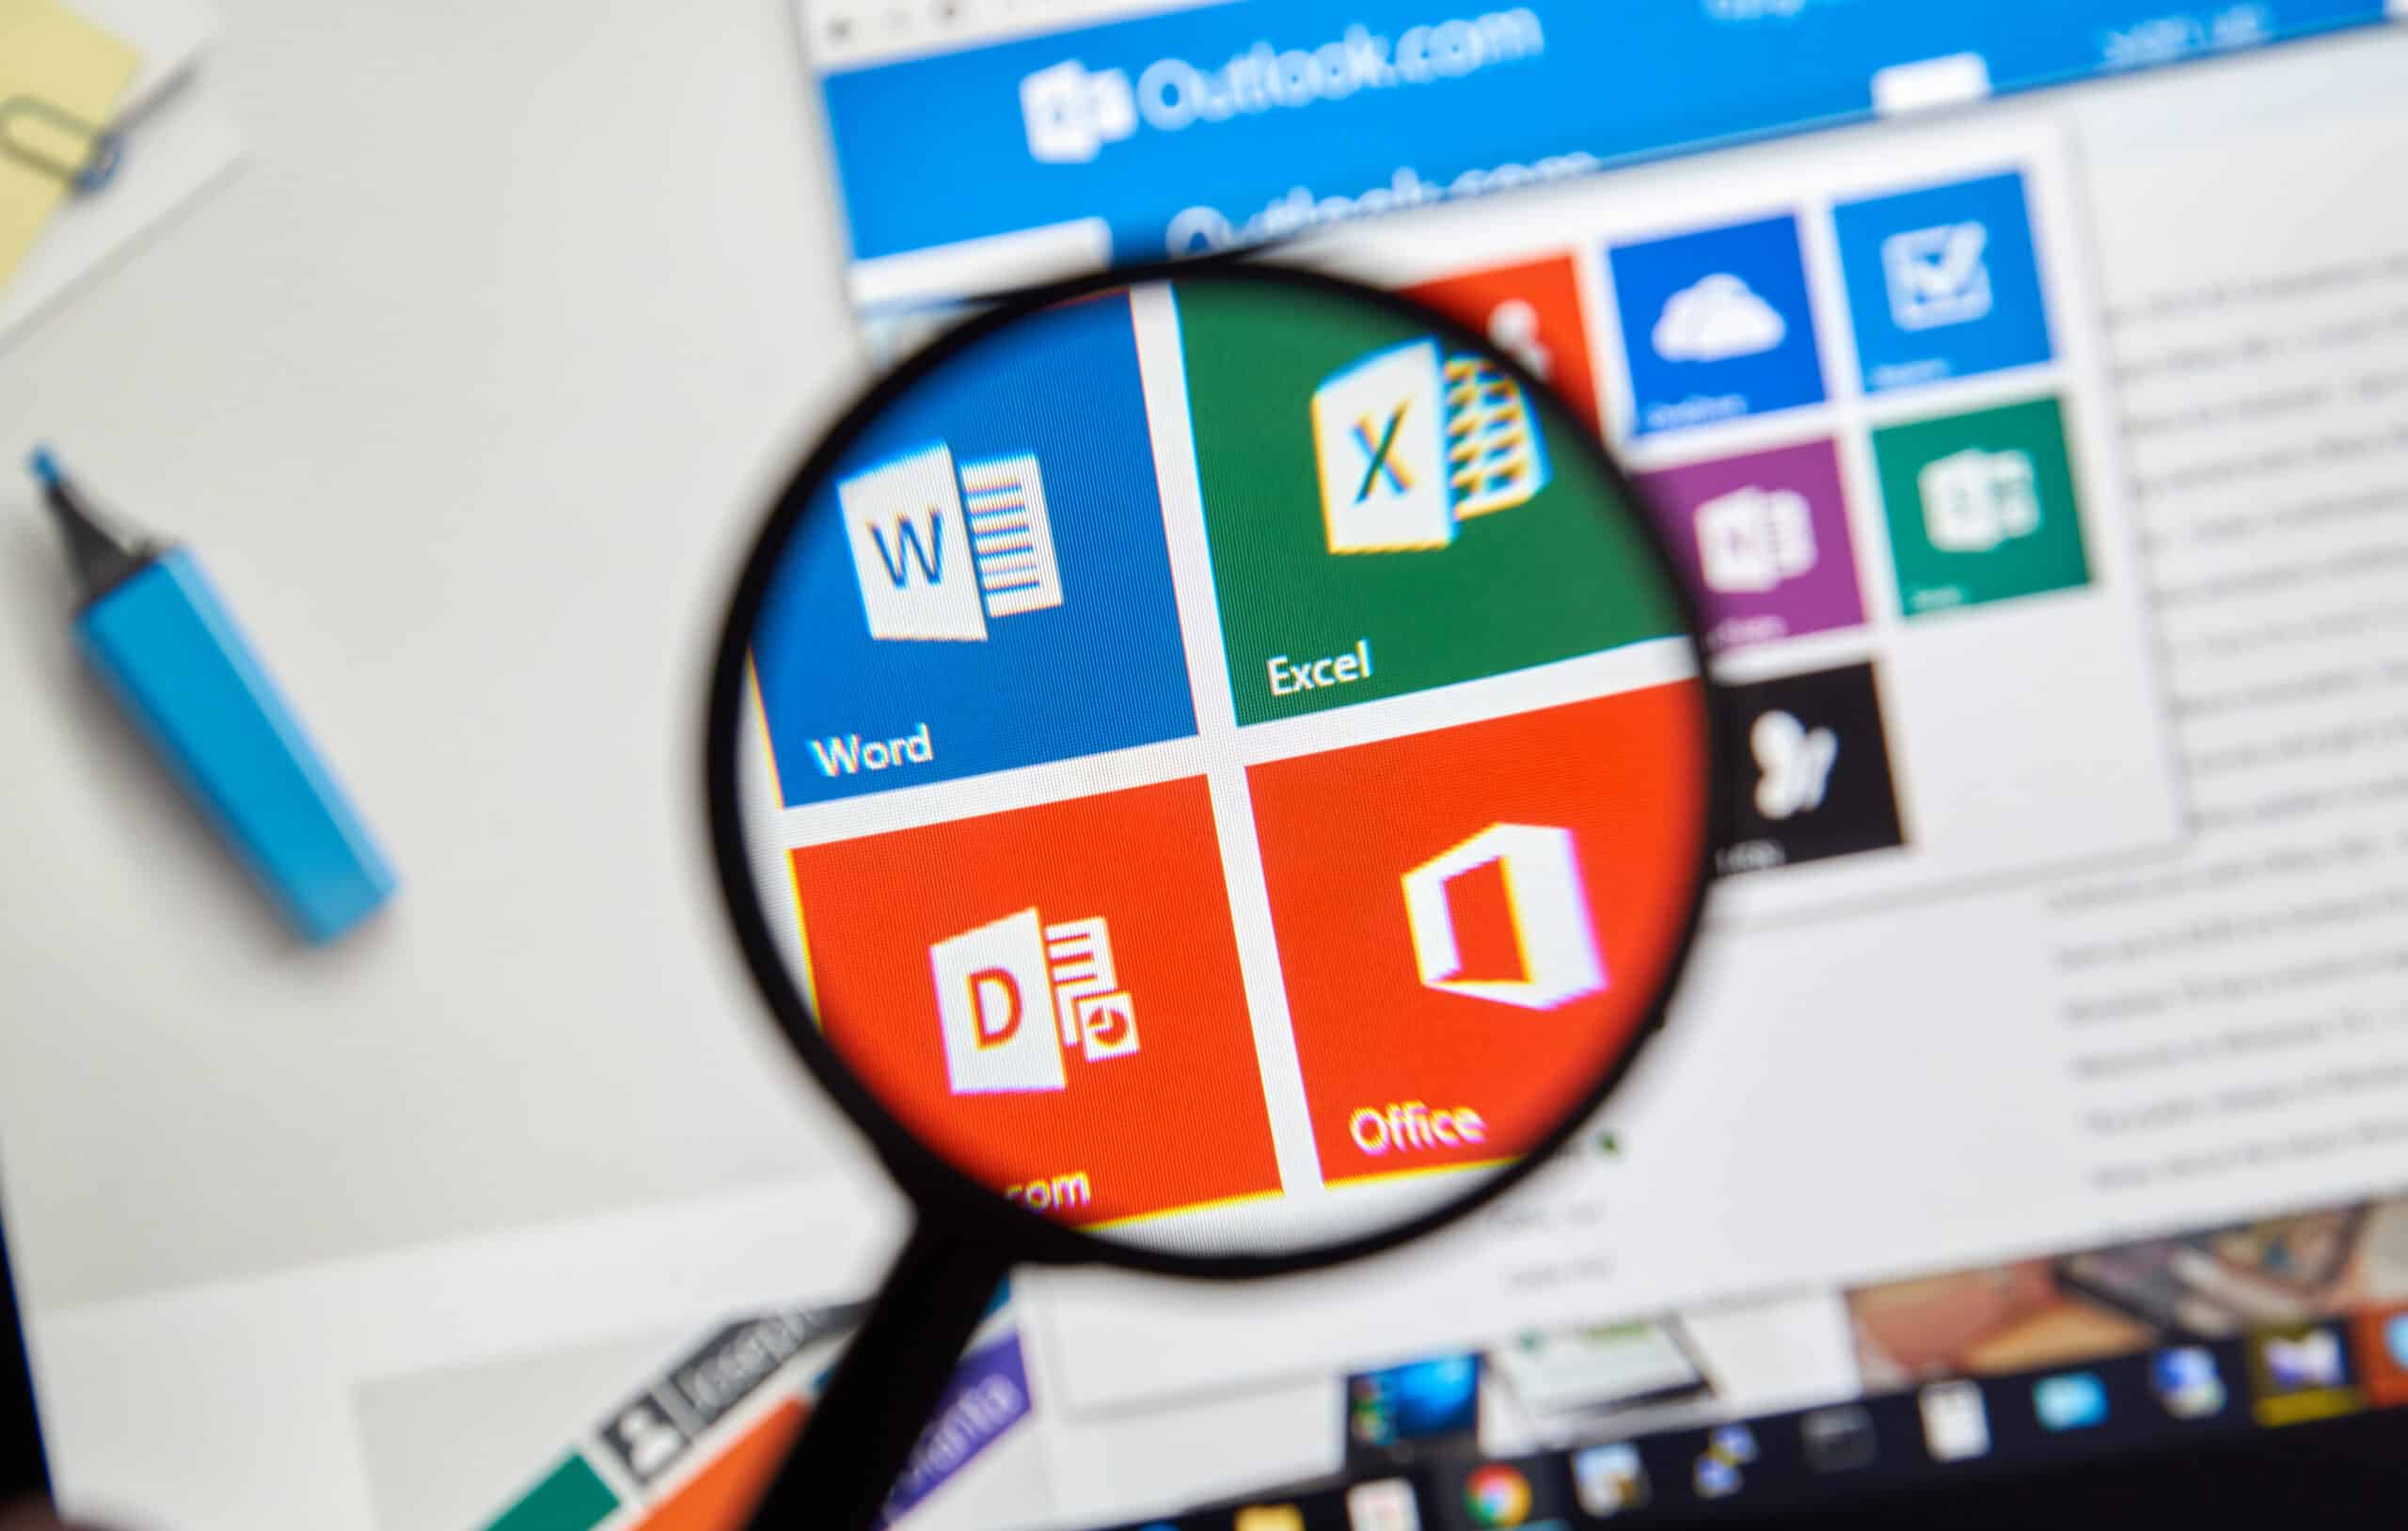 LibreOffice vs Microsoft Office